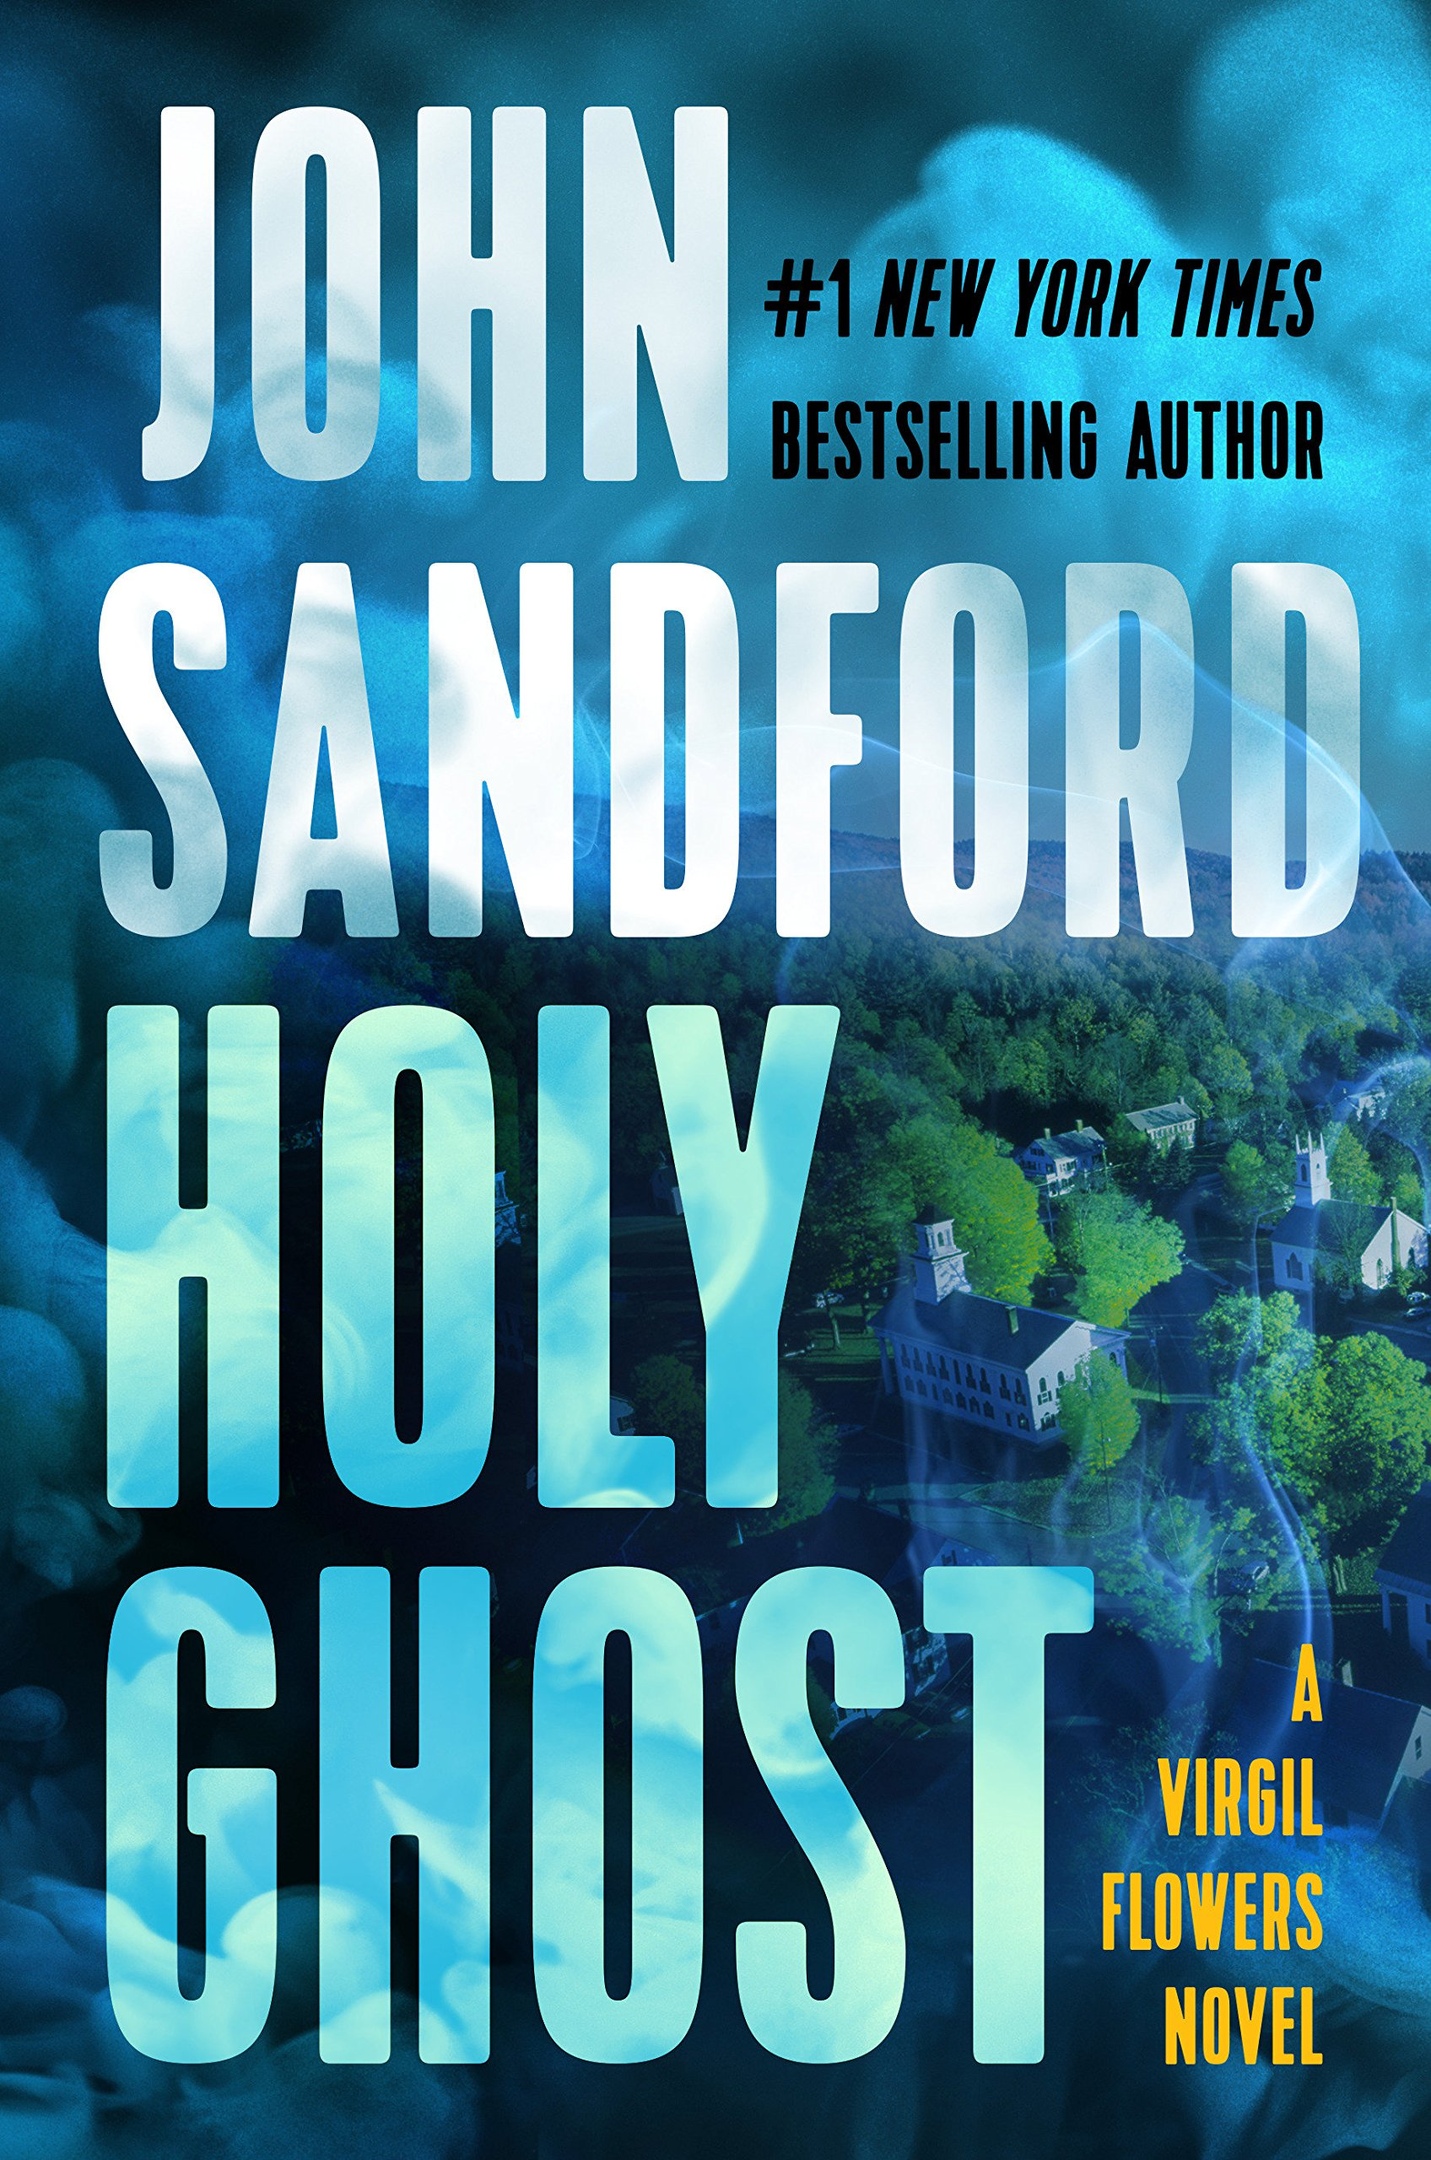 John Sandford – Holy Ghost